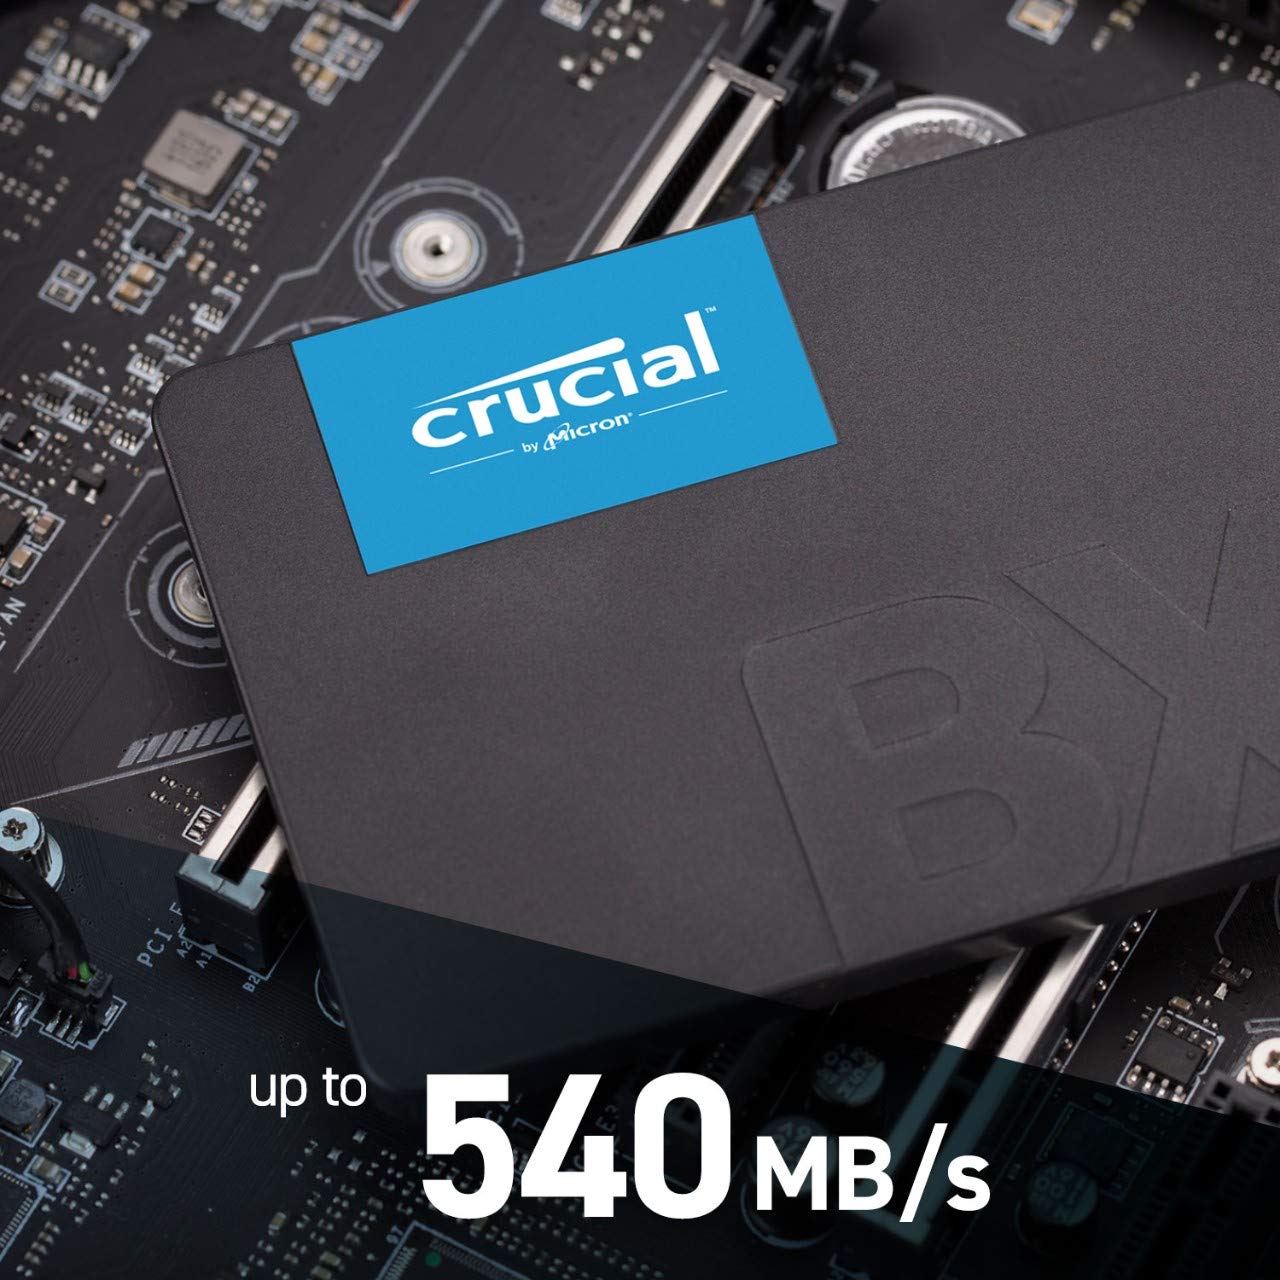 Crucial BX500 480GB 3D NAND SATA 2.5-Inch Internal SSD, up to 540MB/s - CT480BX500SSD1